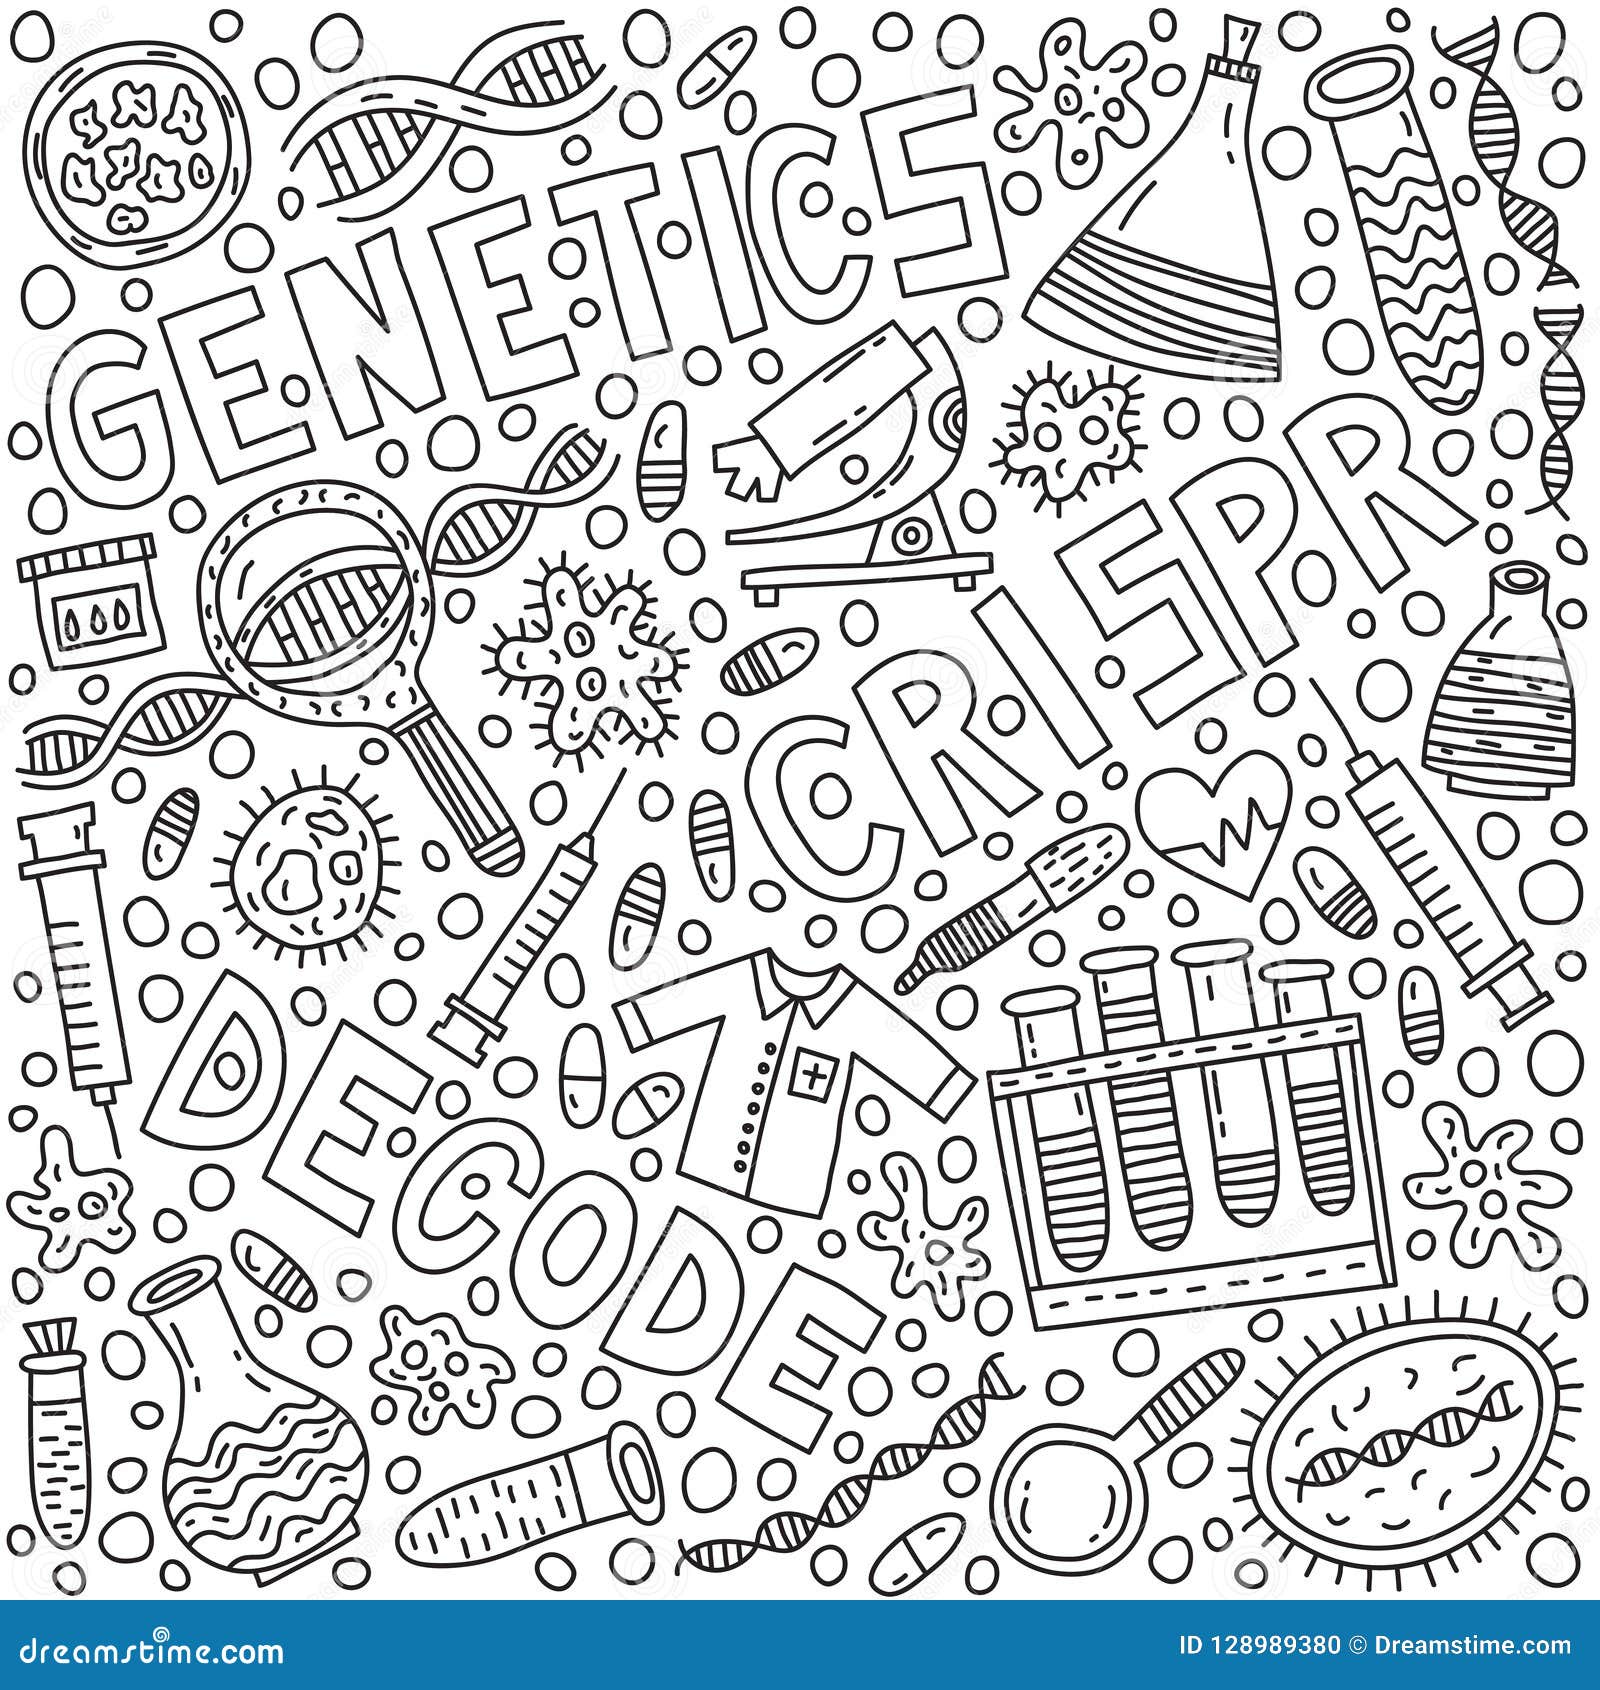 Doodle Illustration Stock Vector Illustration of medicine